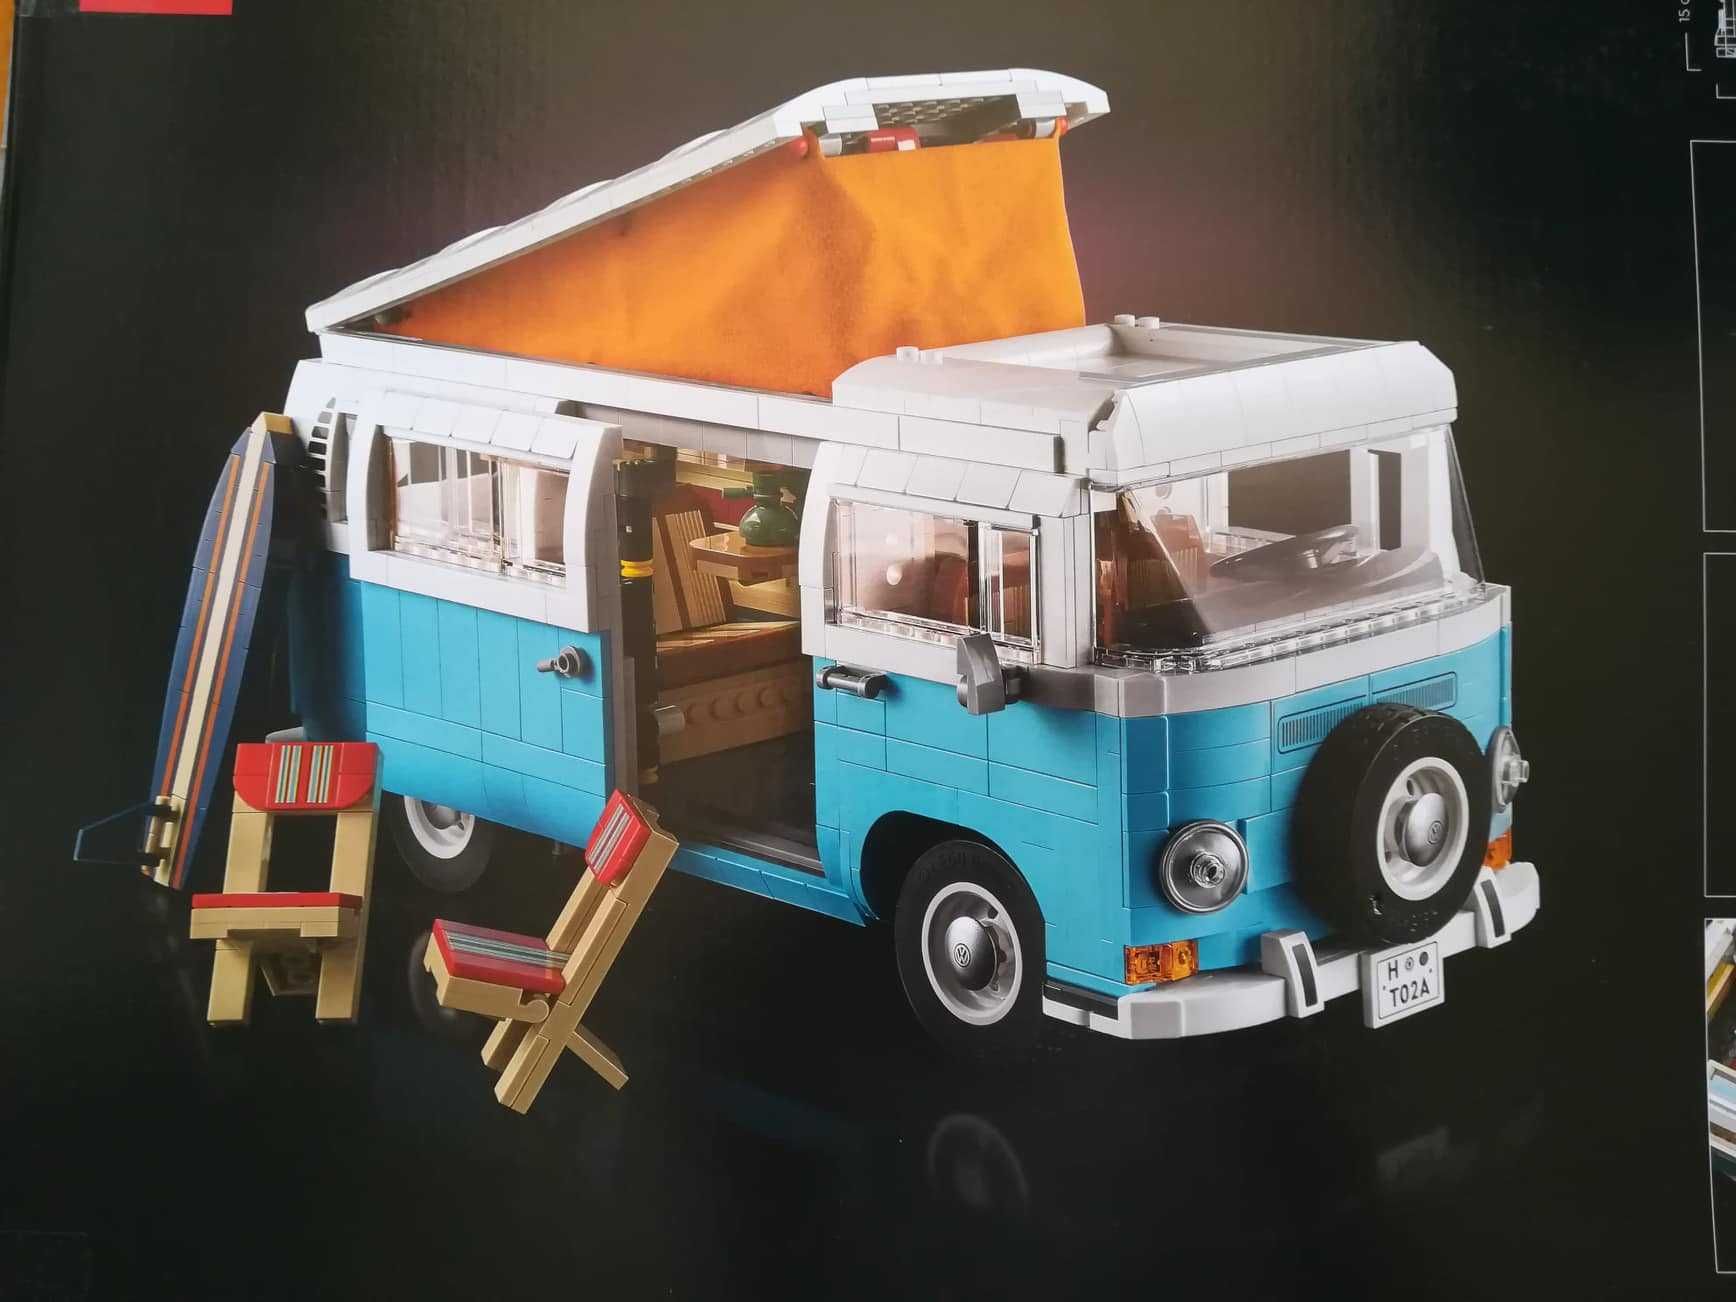 Lego 10279 - Volkswagen T2 Camper Van - NOVA / SELADA